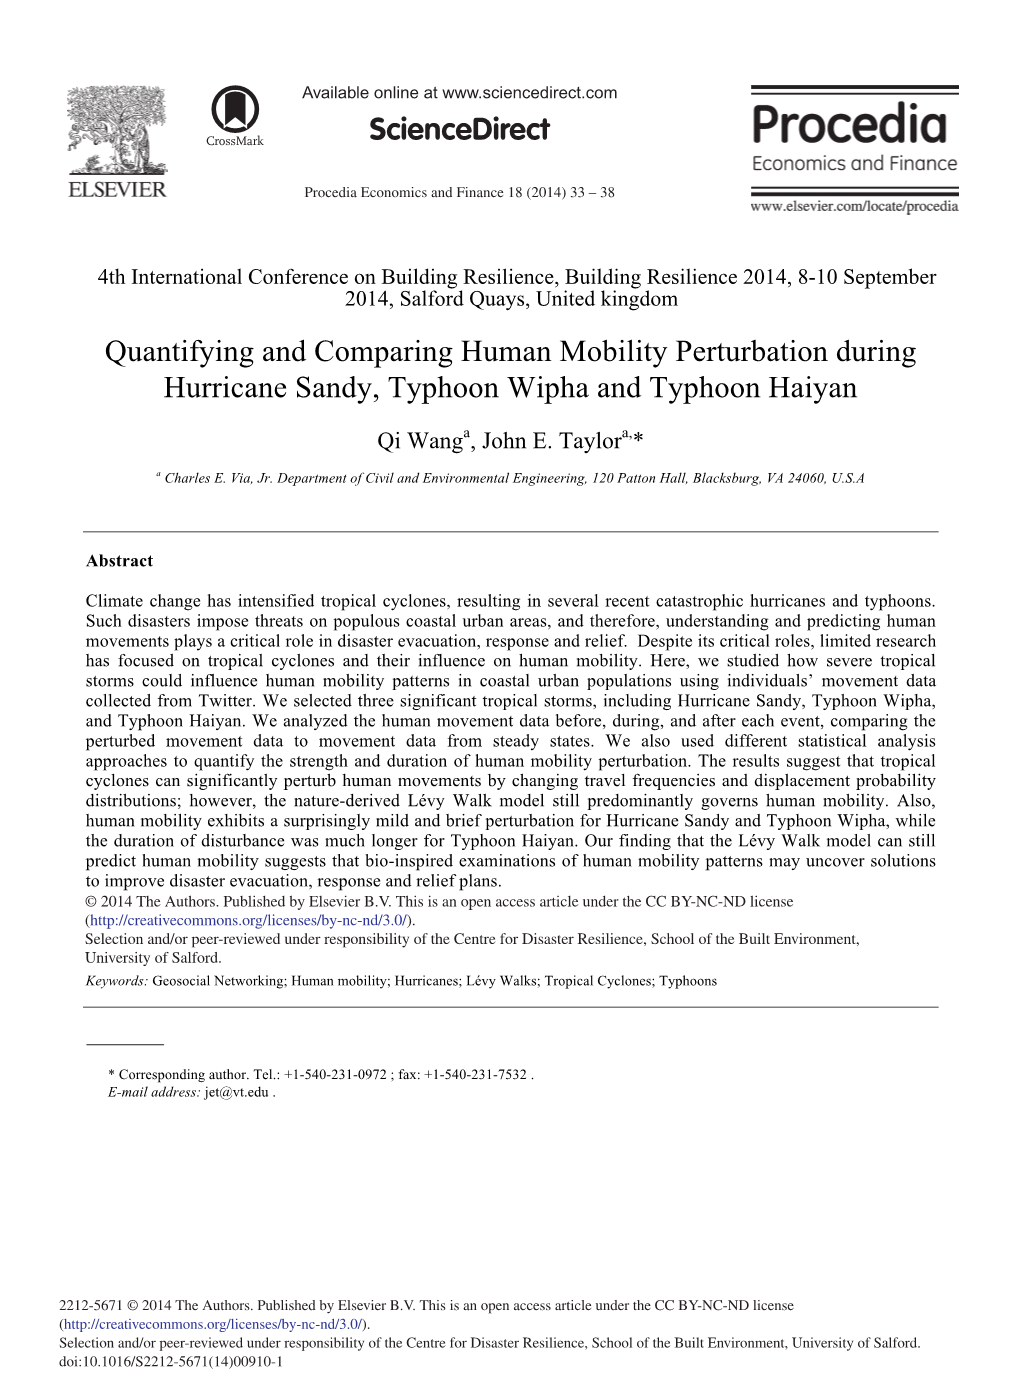 Quantifying, Comparing Human Mobility Perturbation During Hurricane Sandy, Typhoon Wipha, Typhoon Haiyan